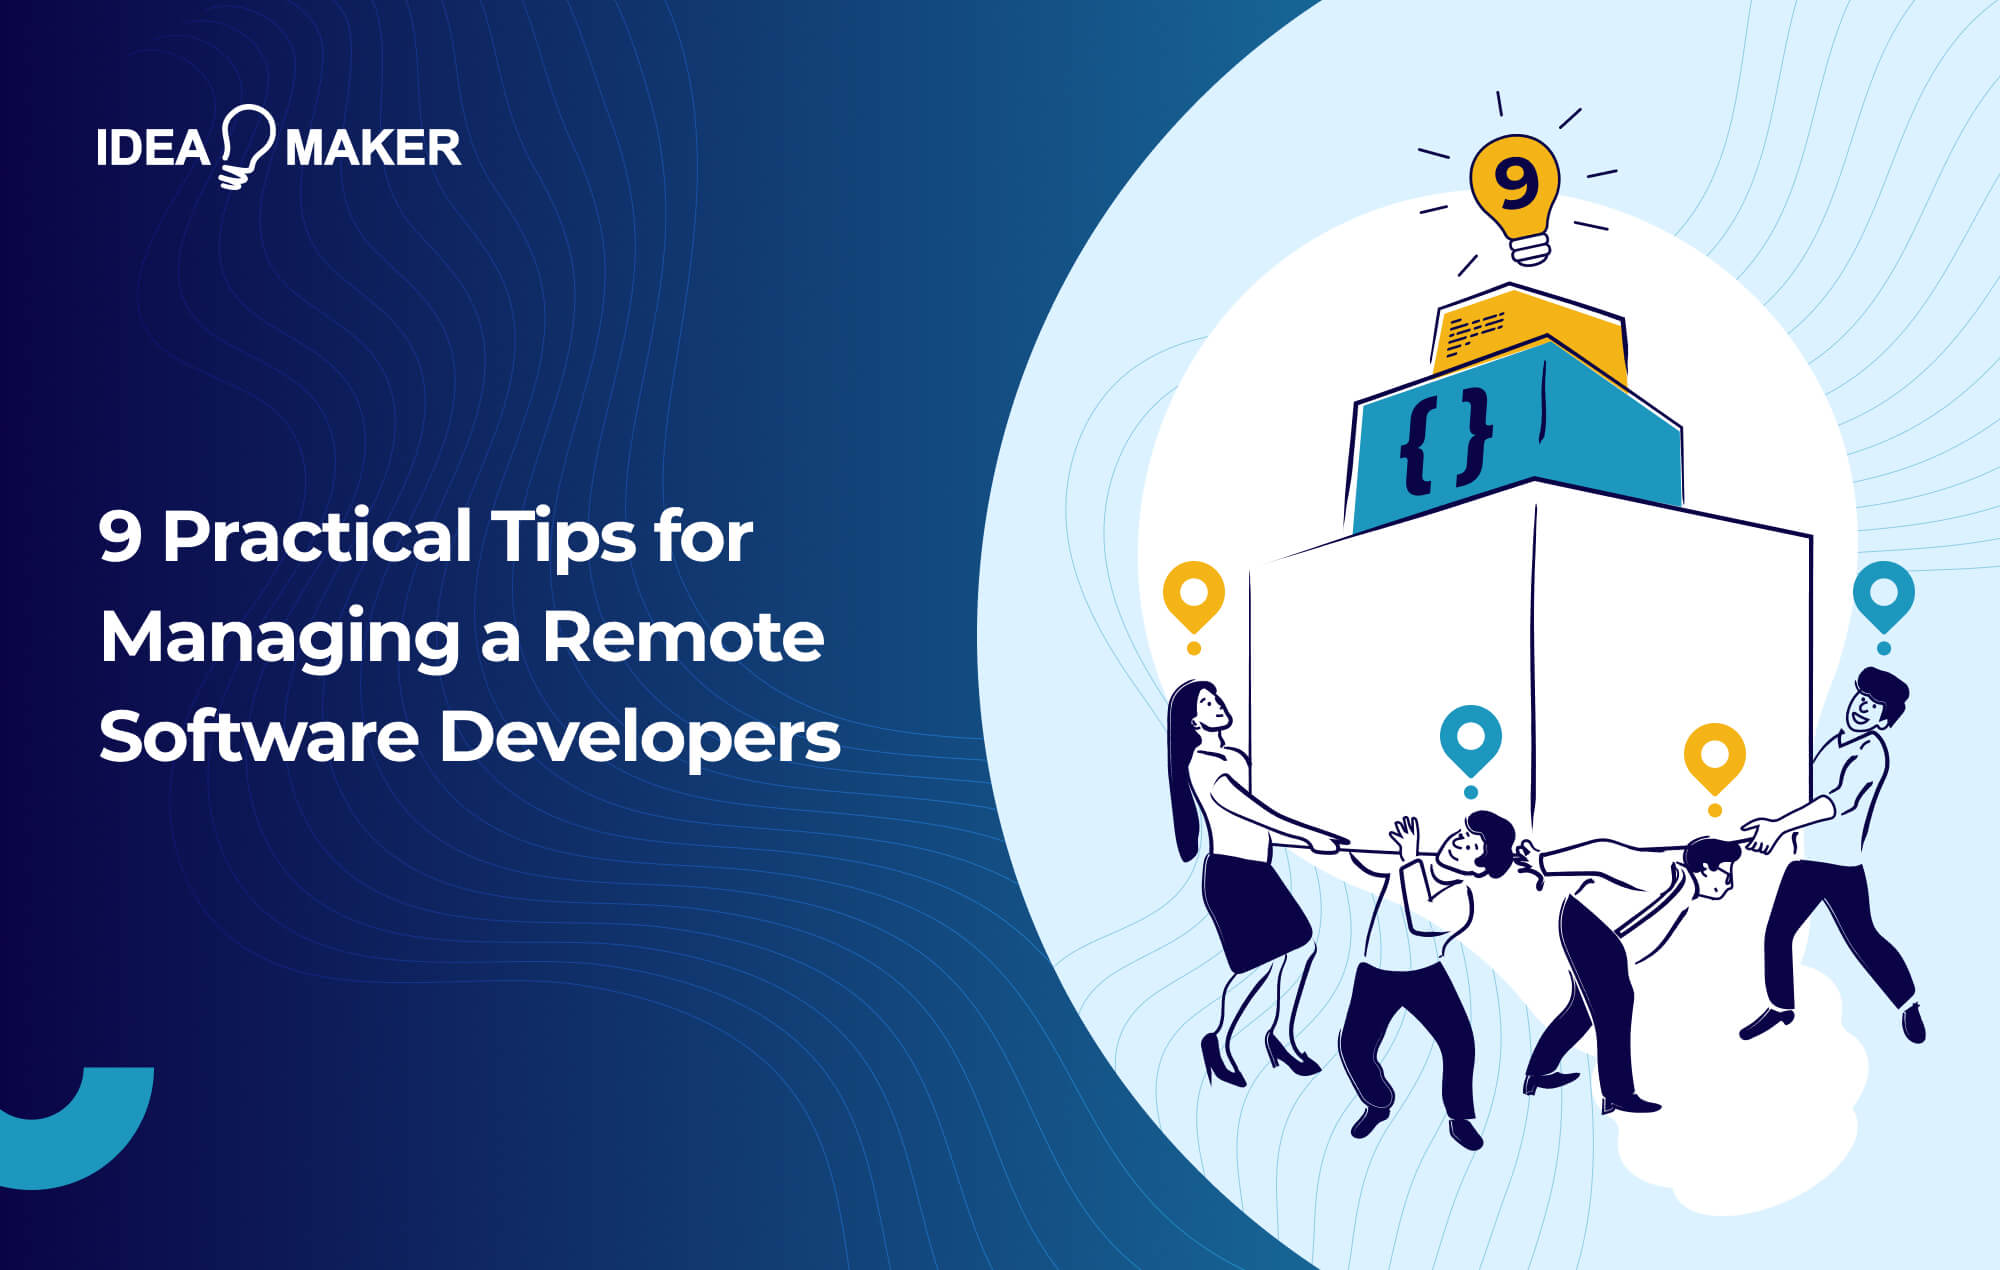 Ideamaker - 9 Practical Tips for Managing a Remote Software Developers